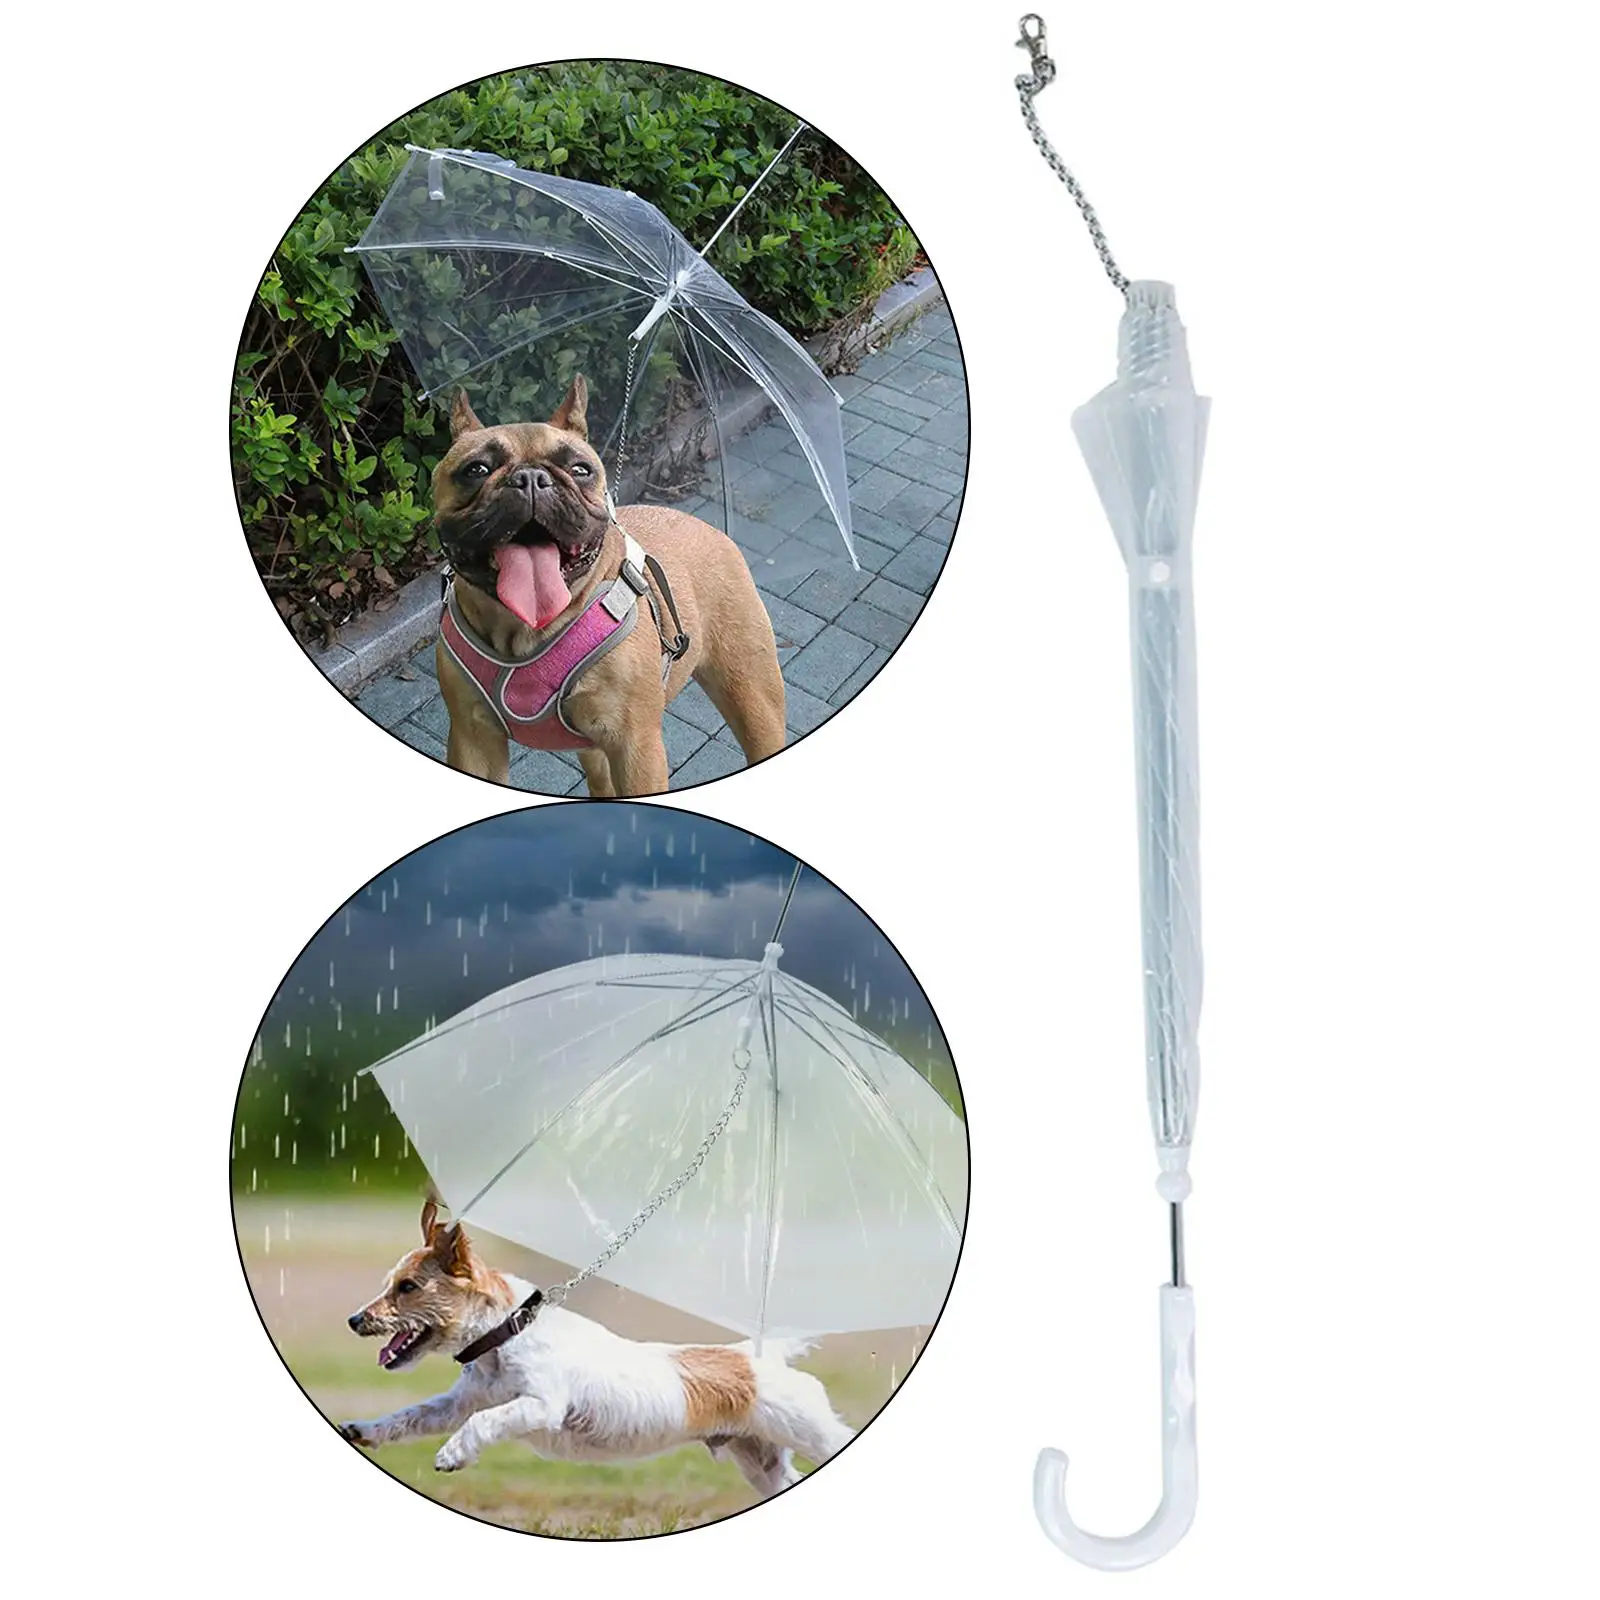 Pet Dog Transparent Umbrella - Clear Folding Adjustable Umbrella Keeps Your Comfortable in Rain with Leash